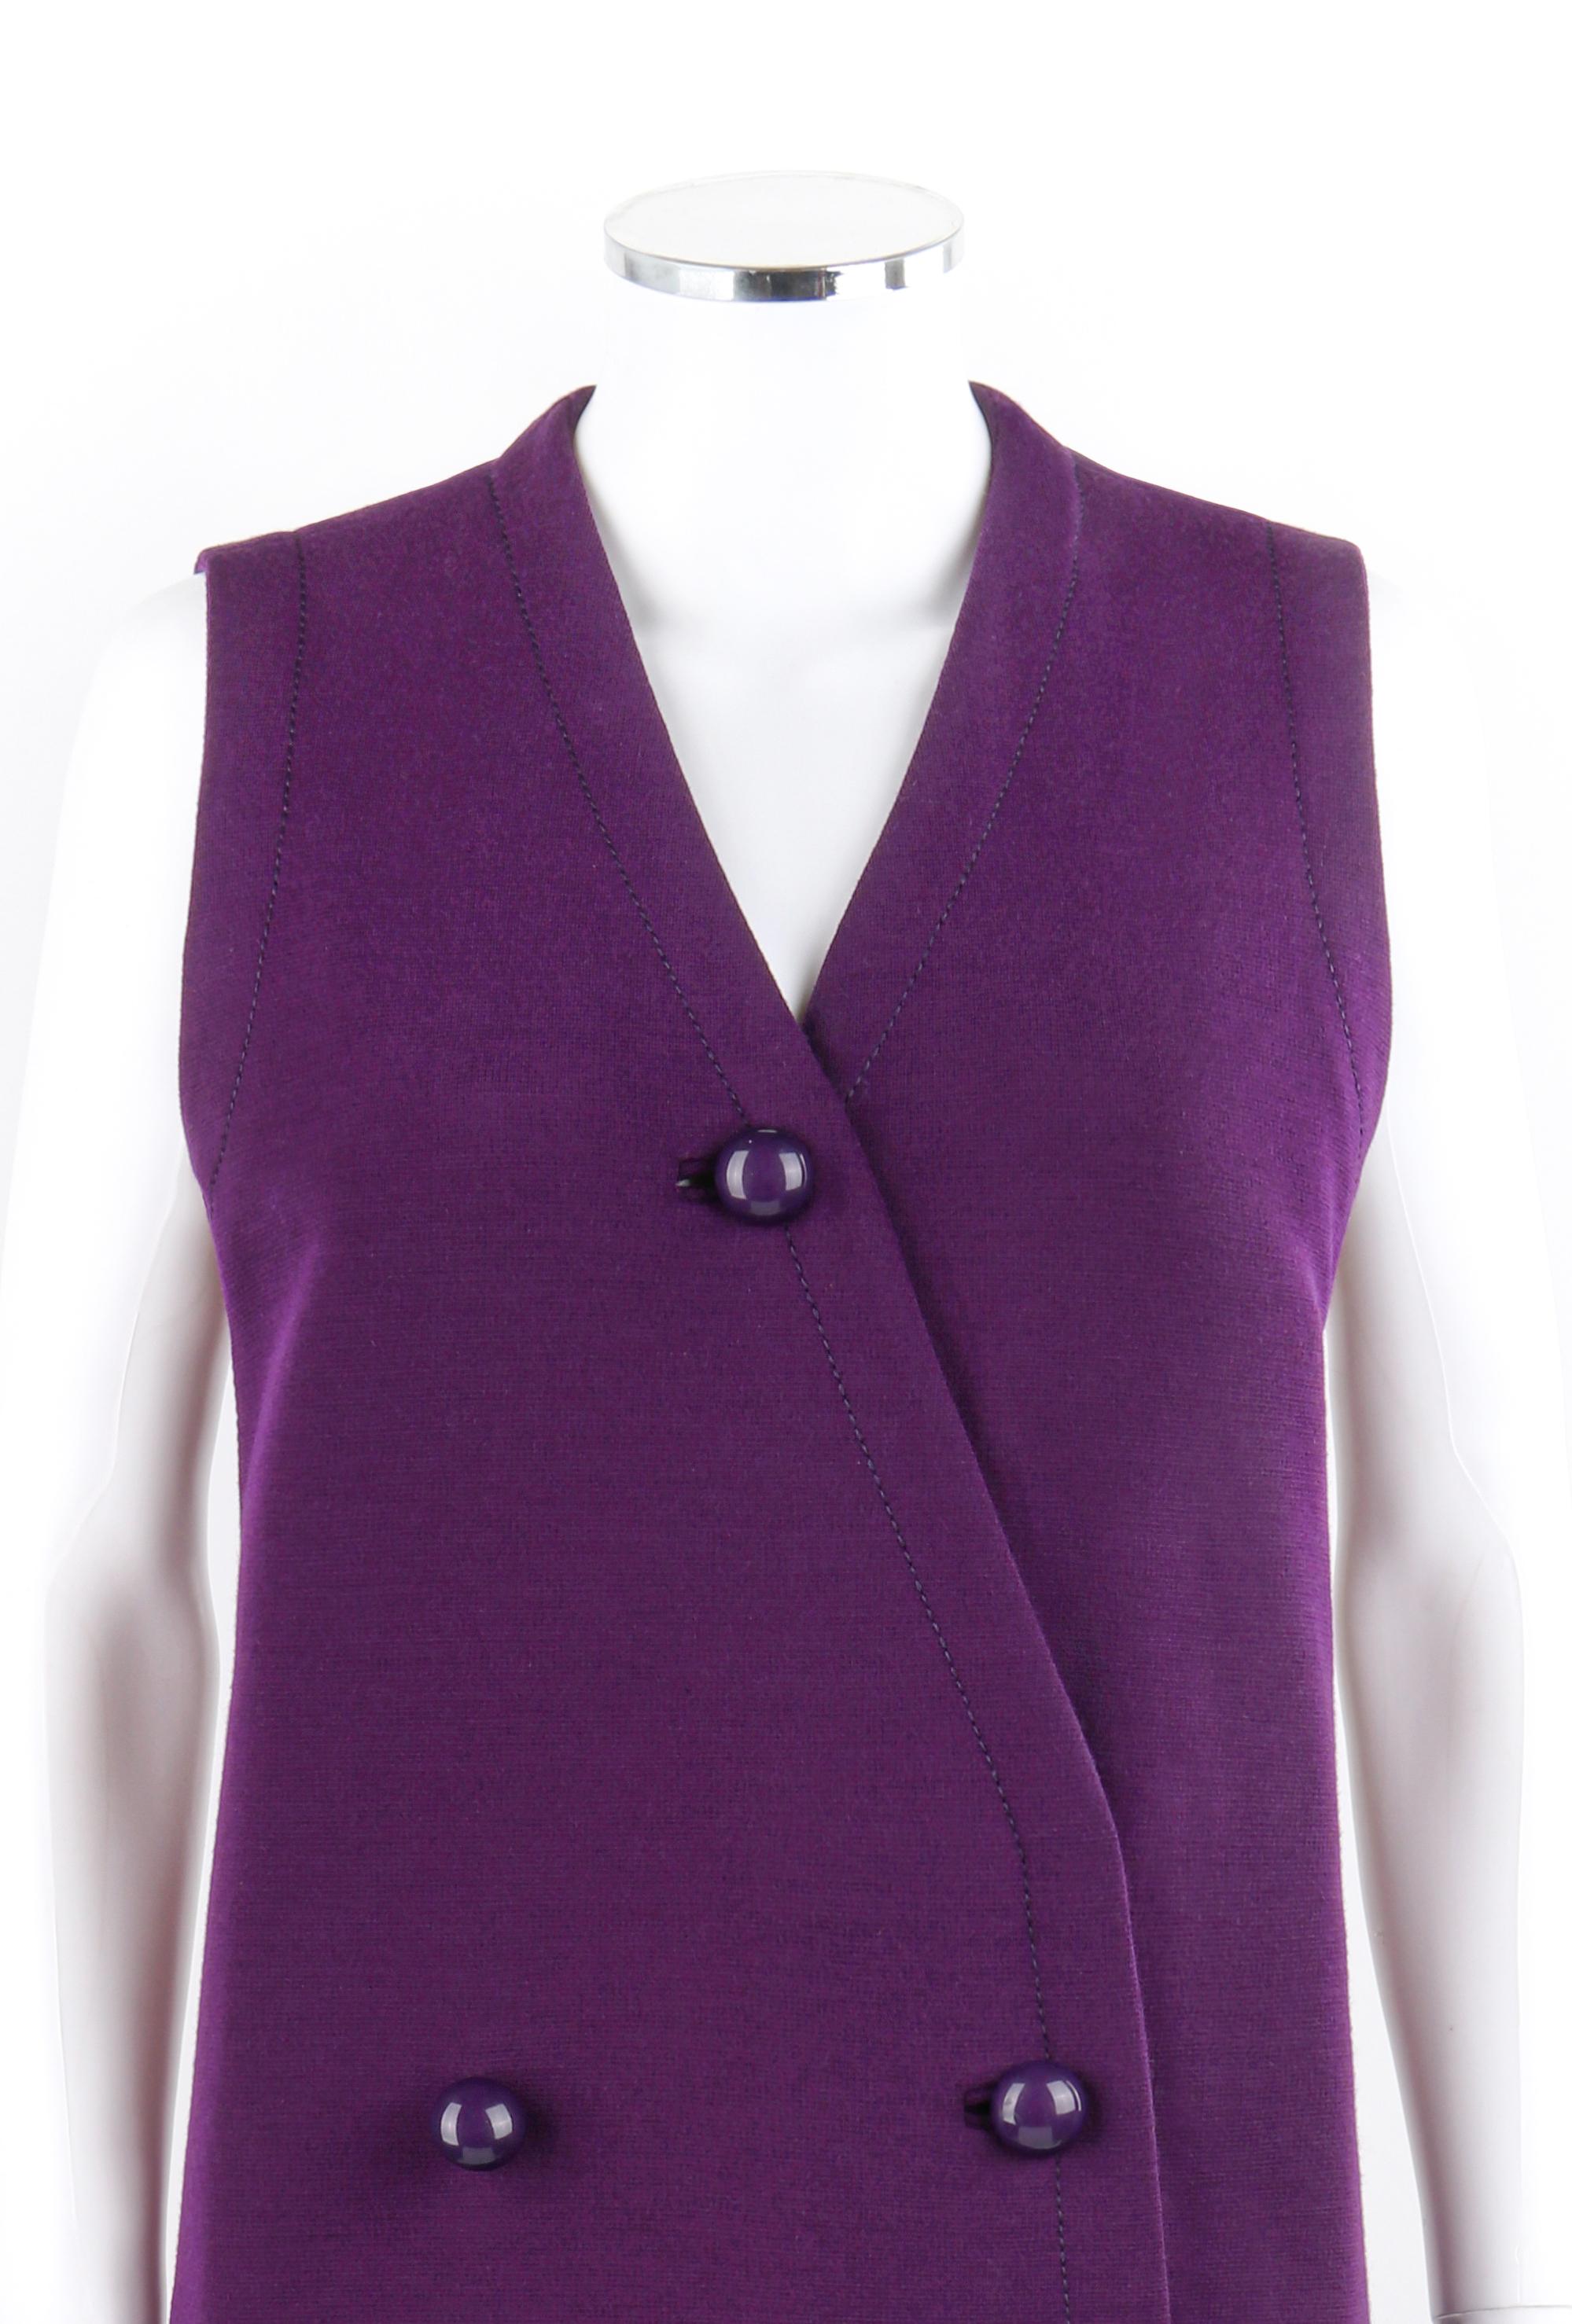 purple sleeveless dress